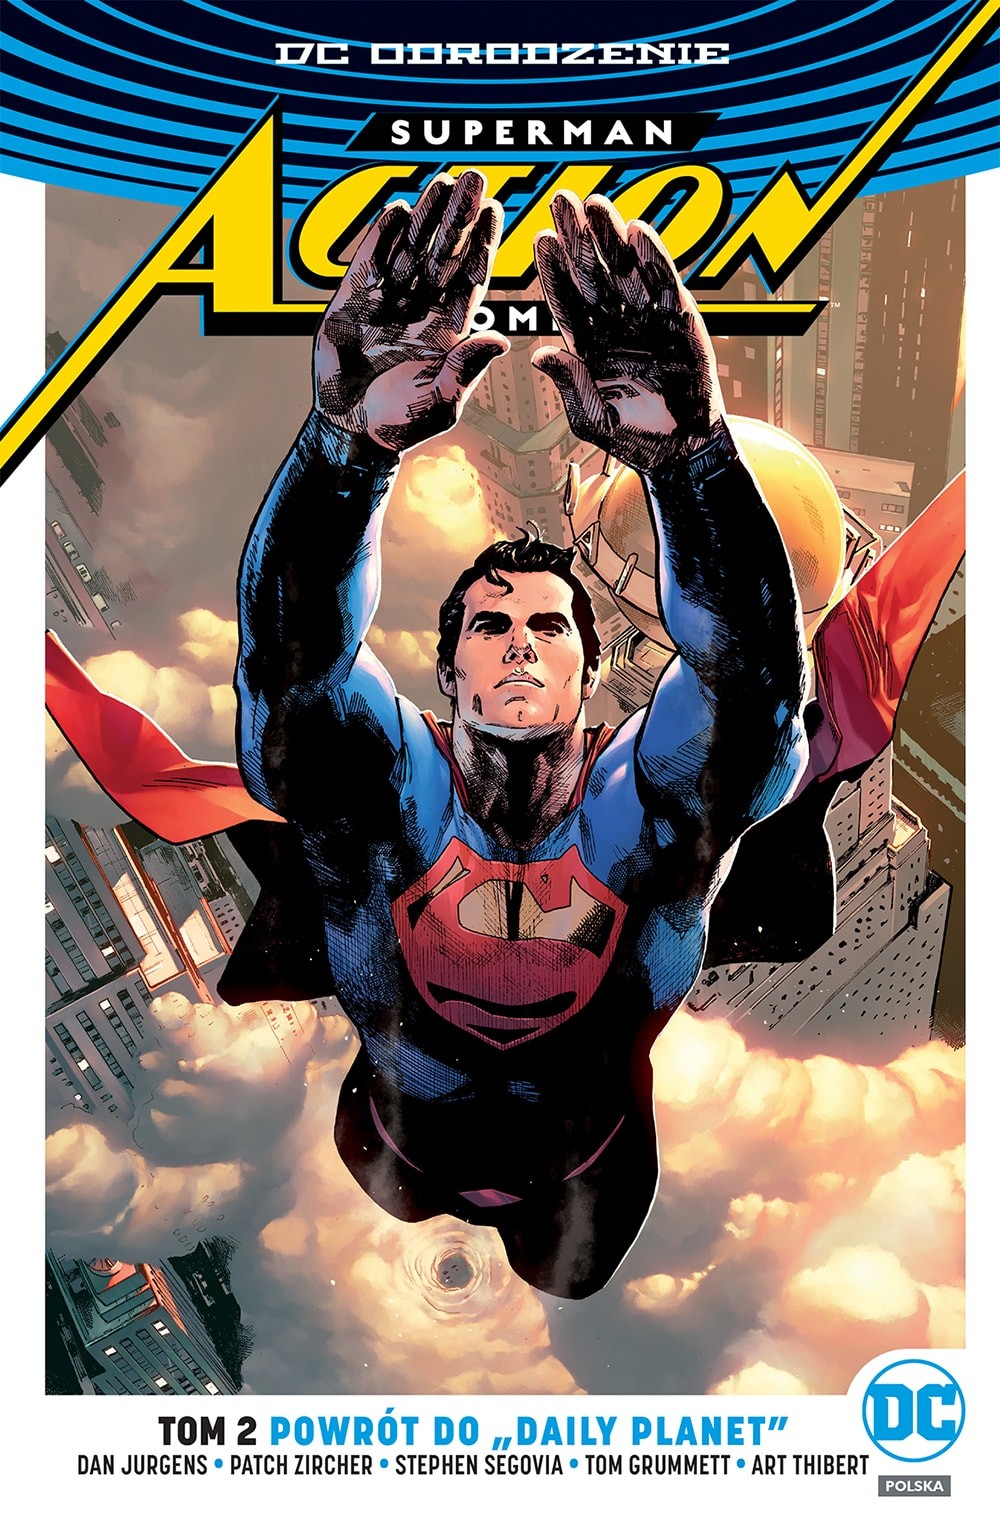 cover_rebirth Superman Action_tom 02 10 cm-min.jpg